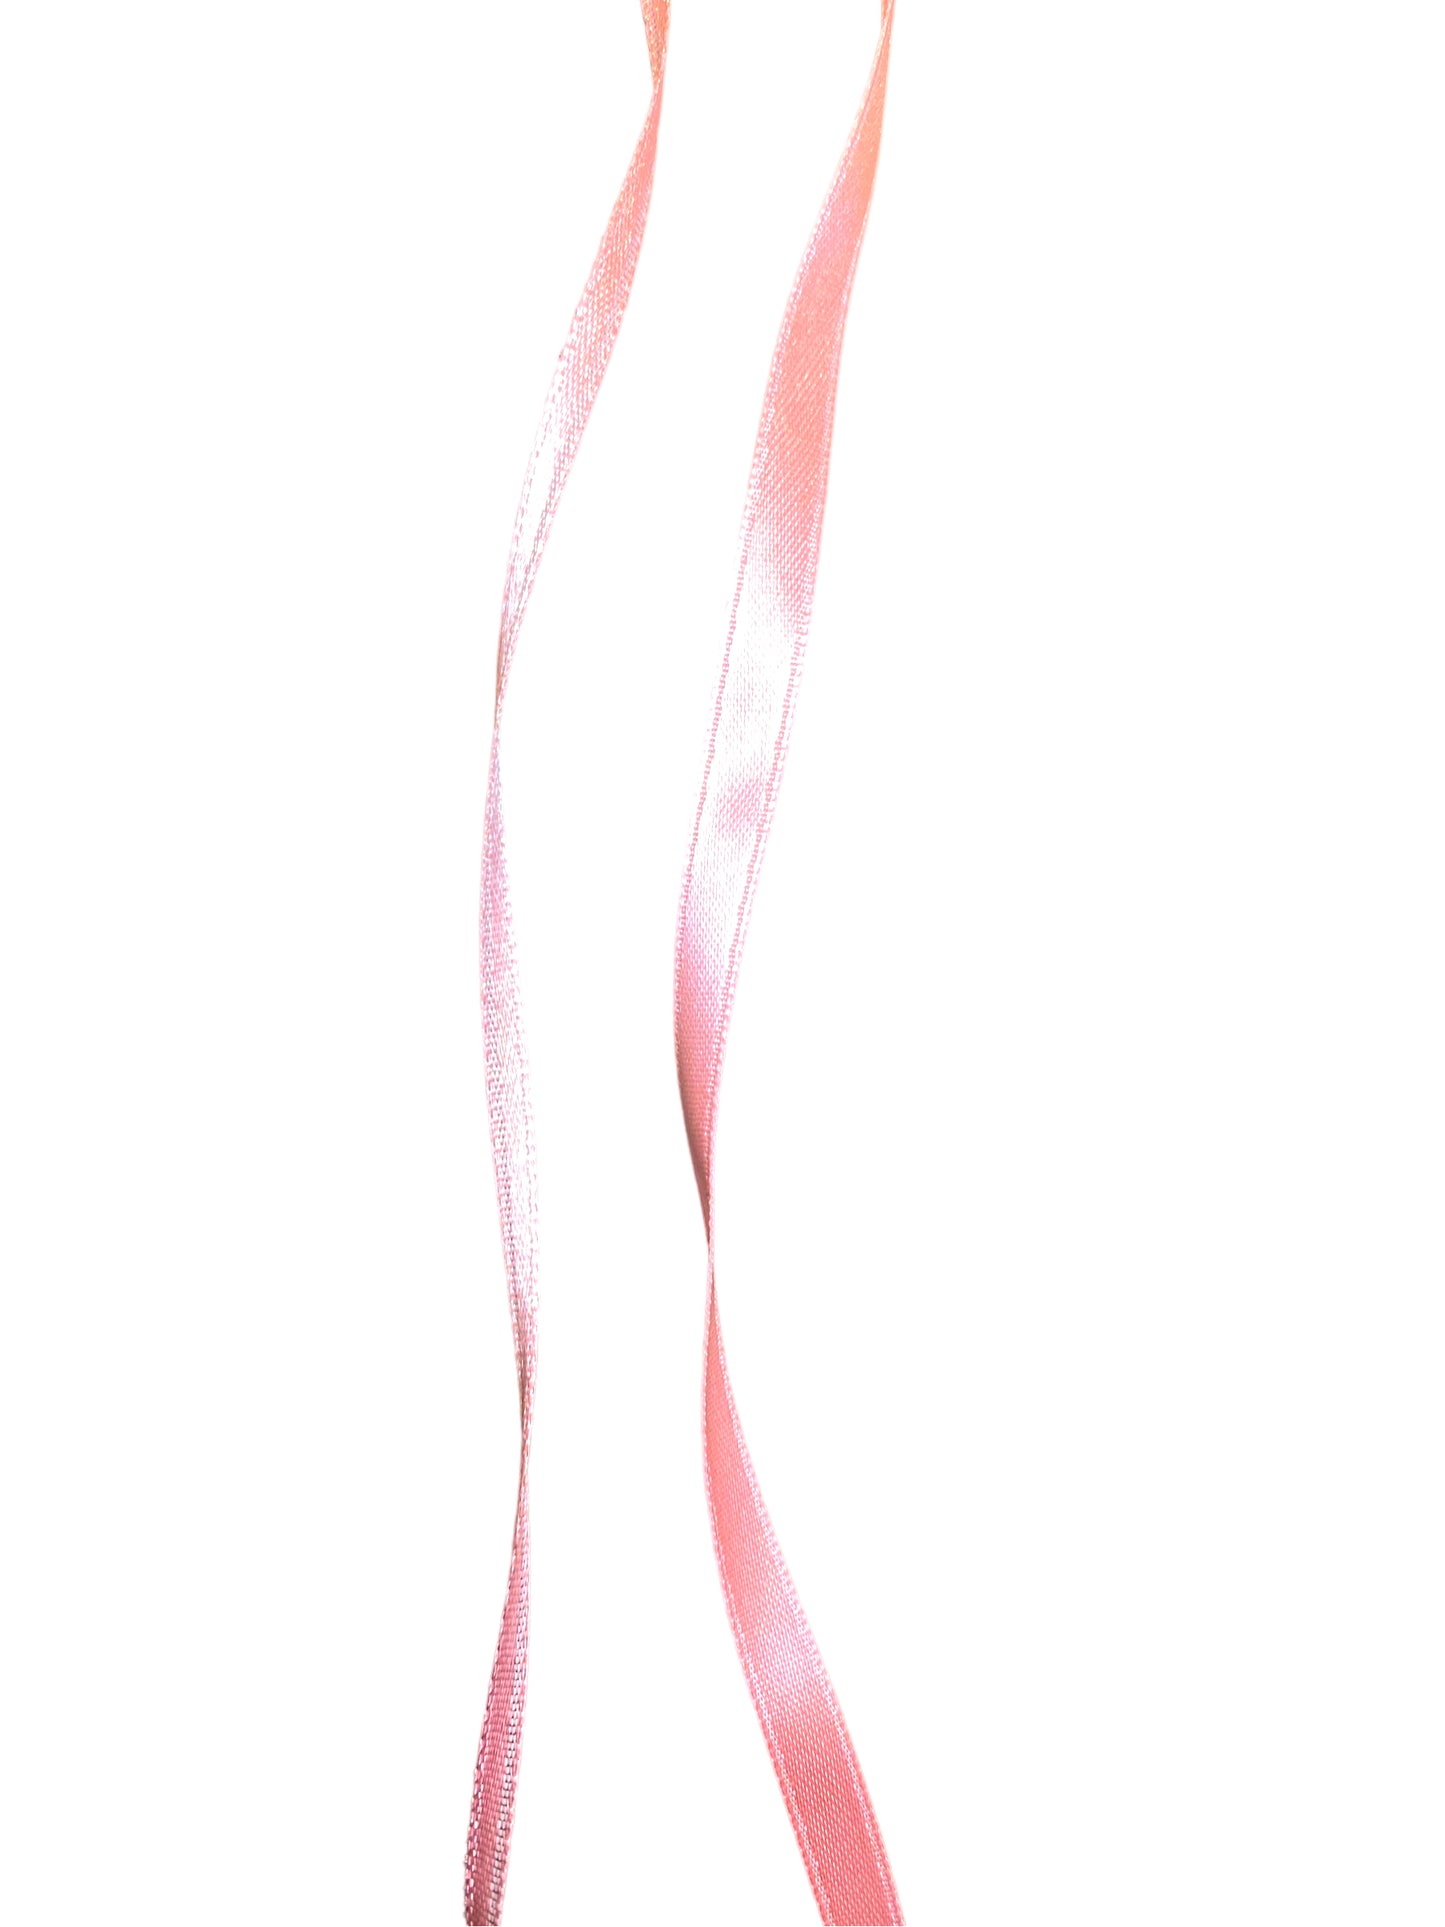 Silkebånd - varm rosa / Warm pink